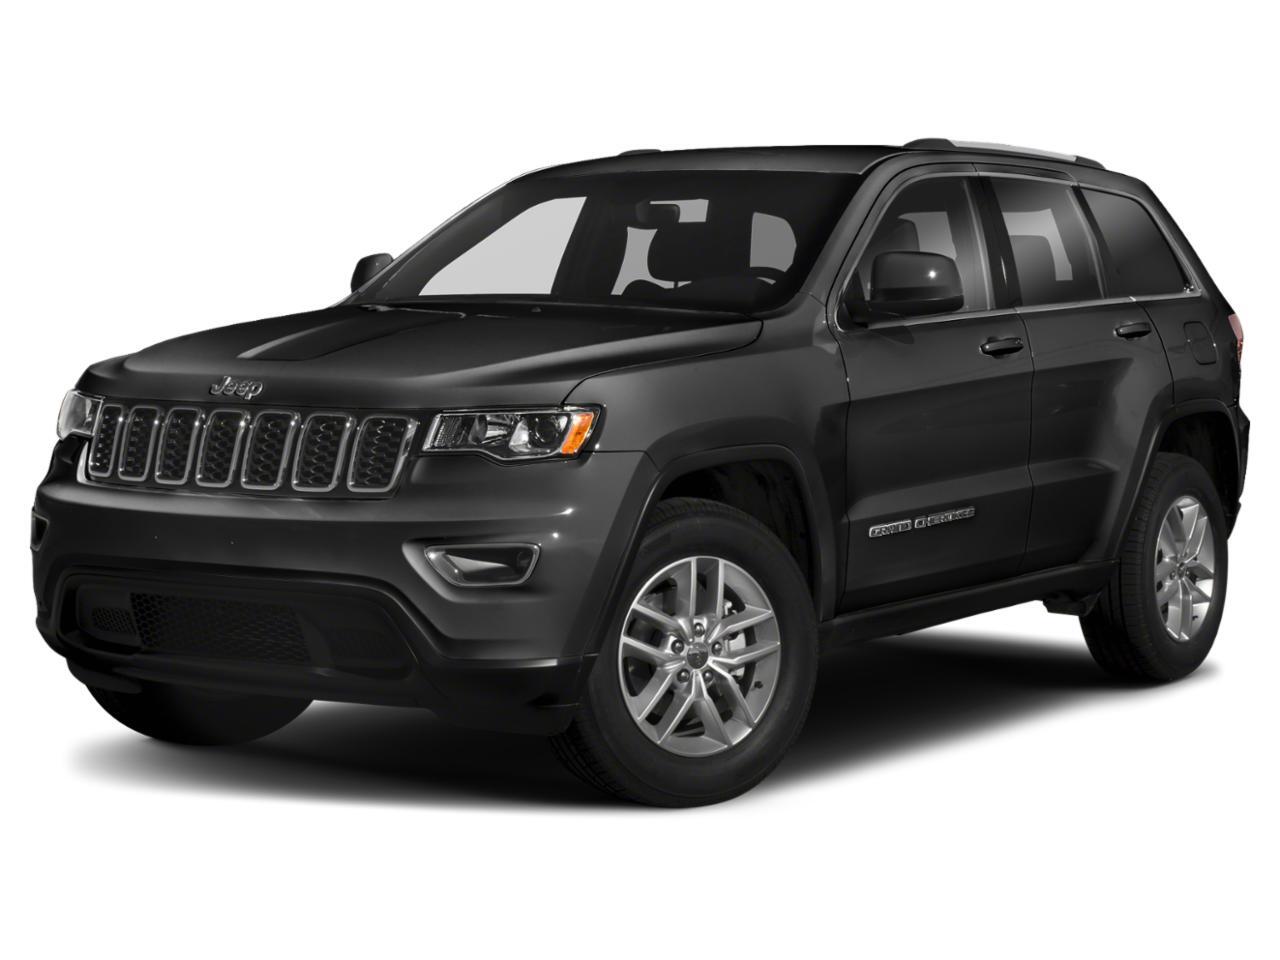 2019 Jeep Grand Cherokee AWD Lerado $279bw, Sunroof, Nav, Heated Seats